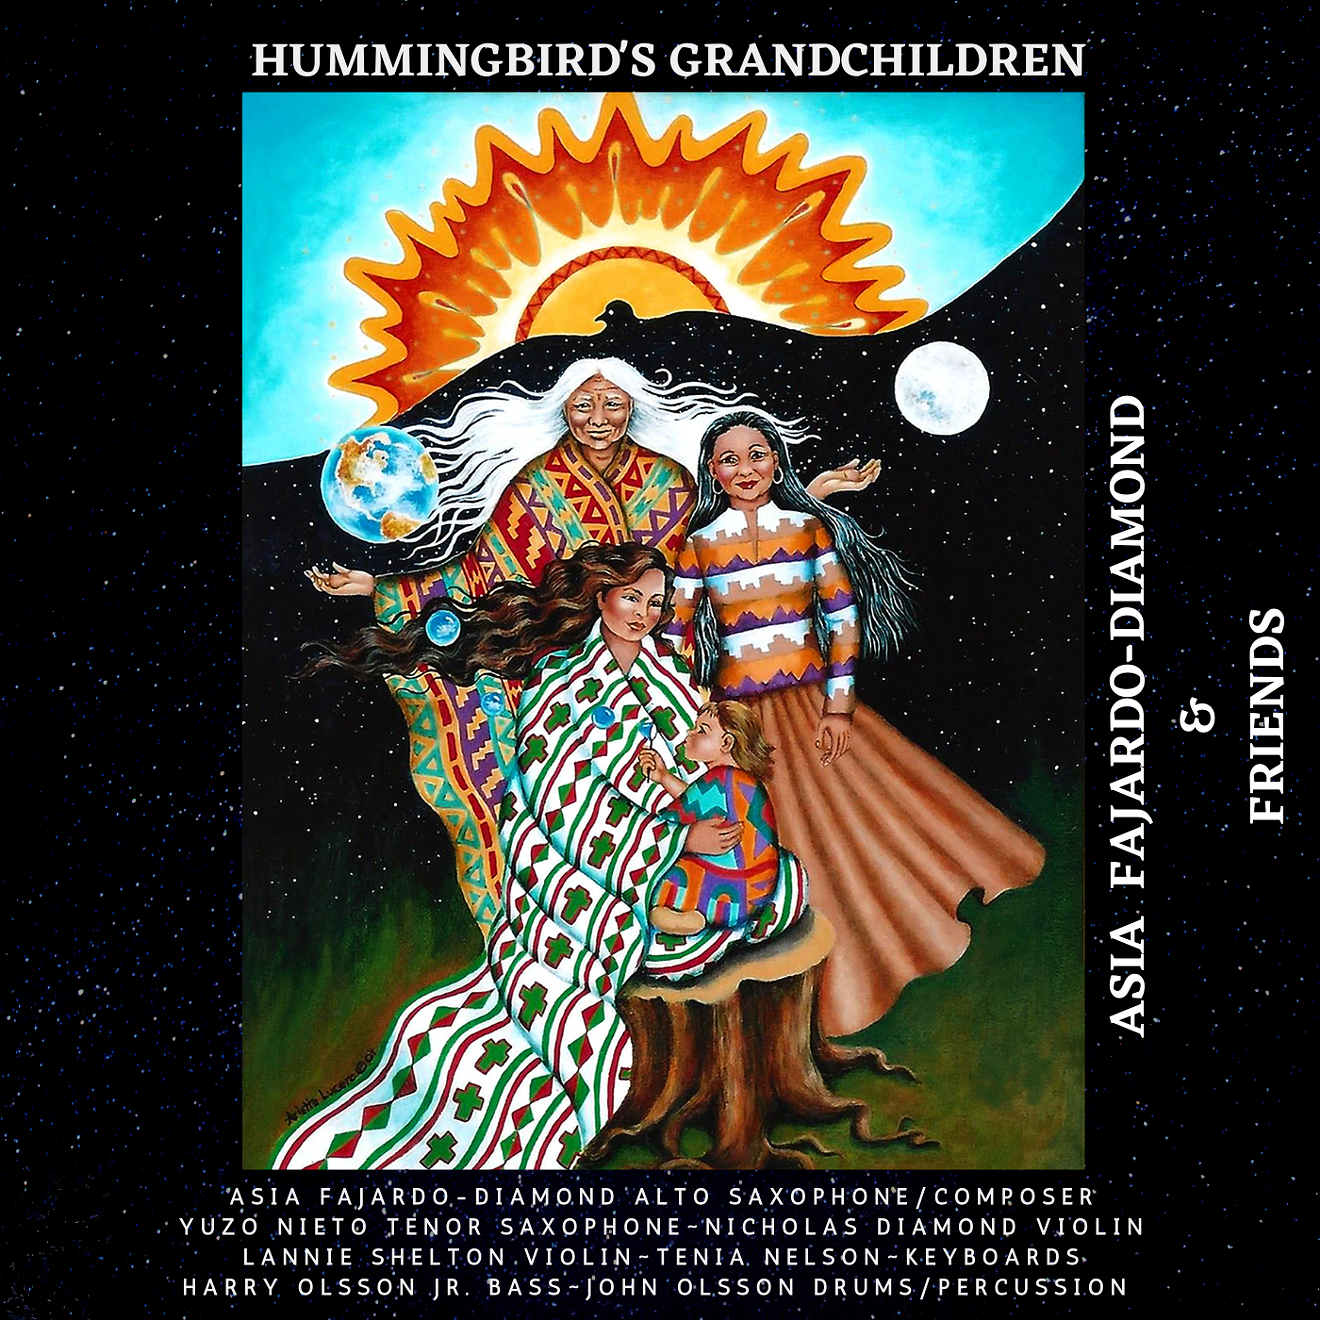 Asia Fajardo-Diamond's EP Hummingbird's Grandchildren will be released in May.